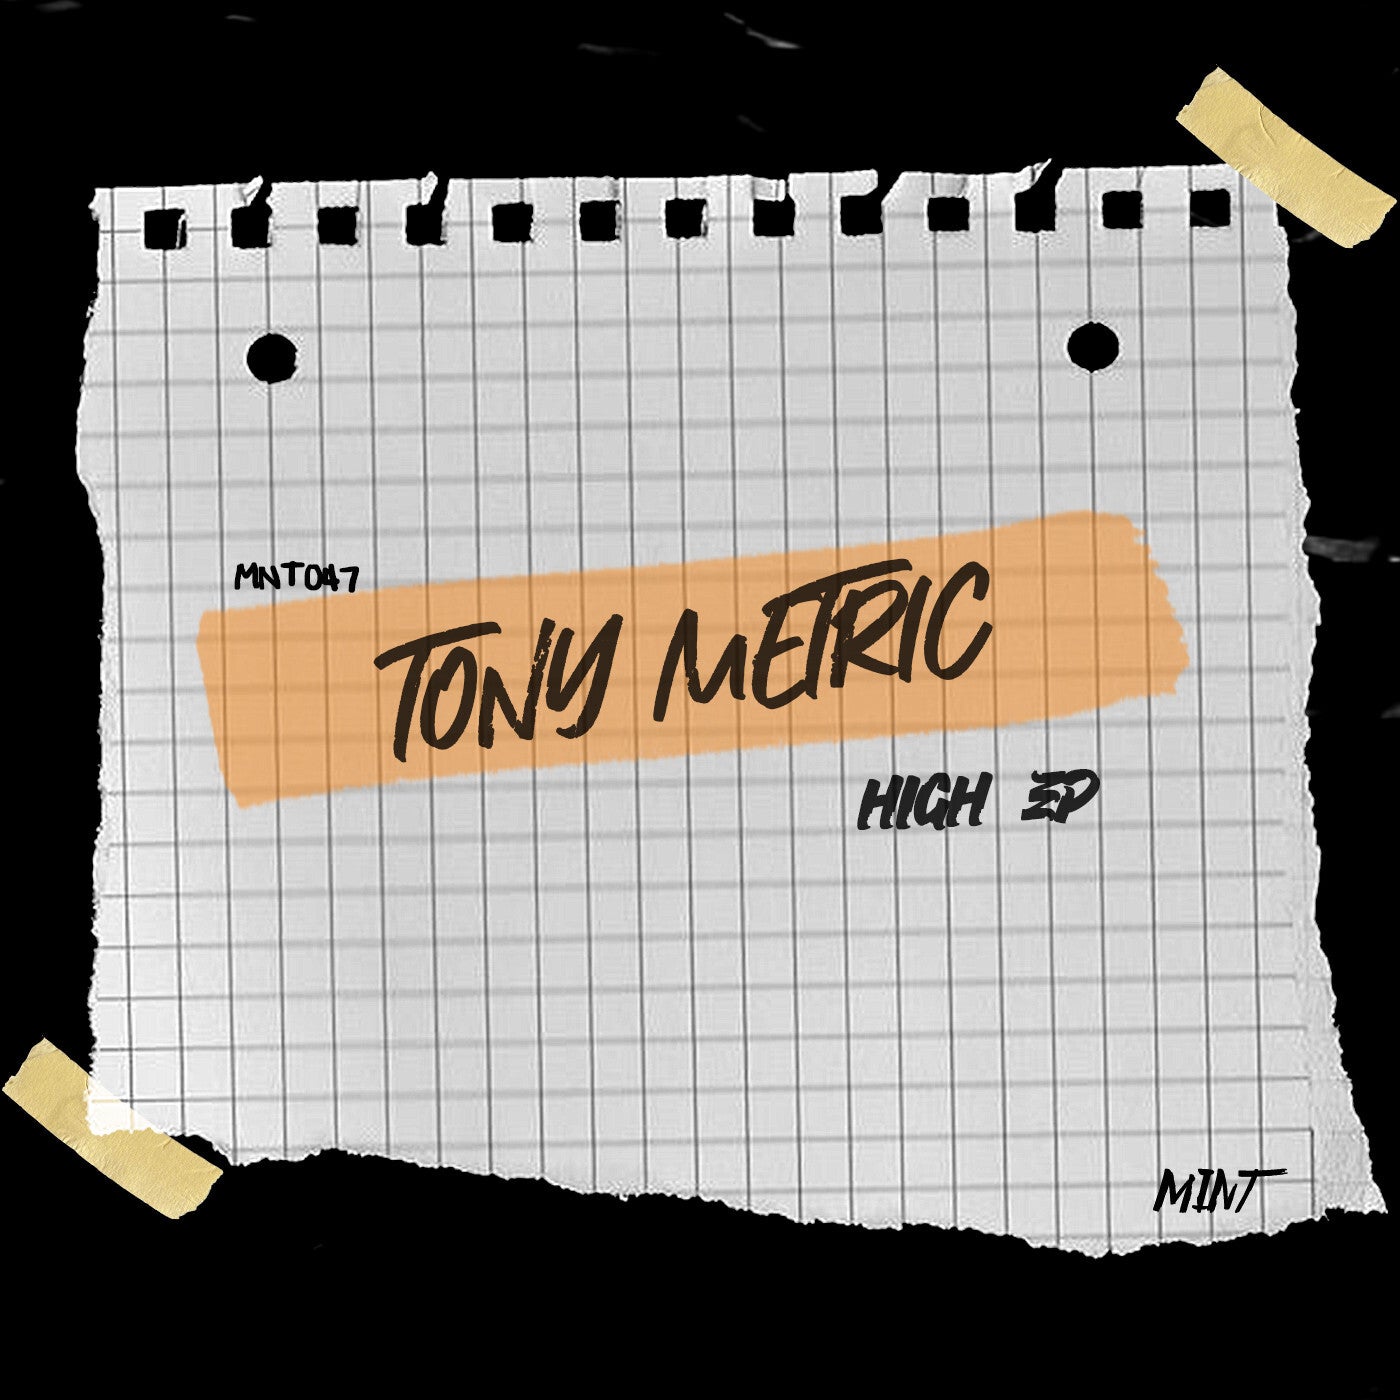 Tony Metric – High EP [MNT047]